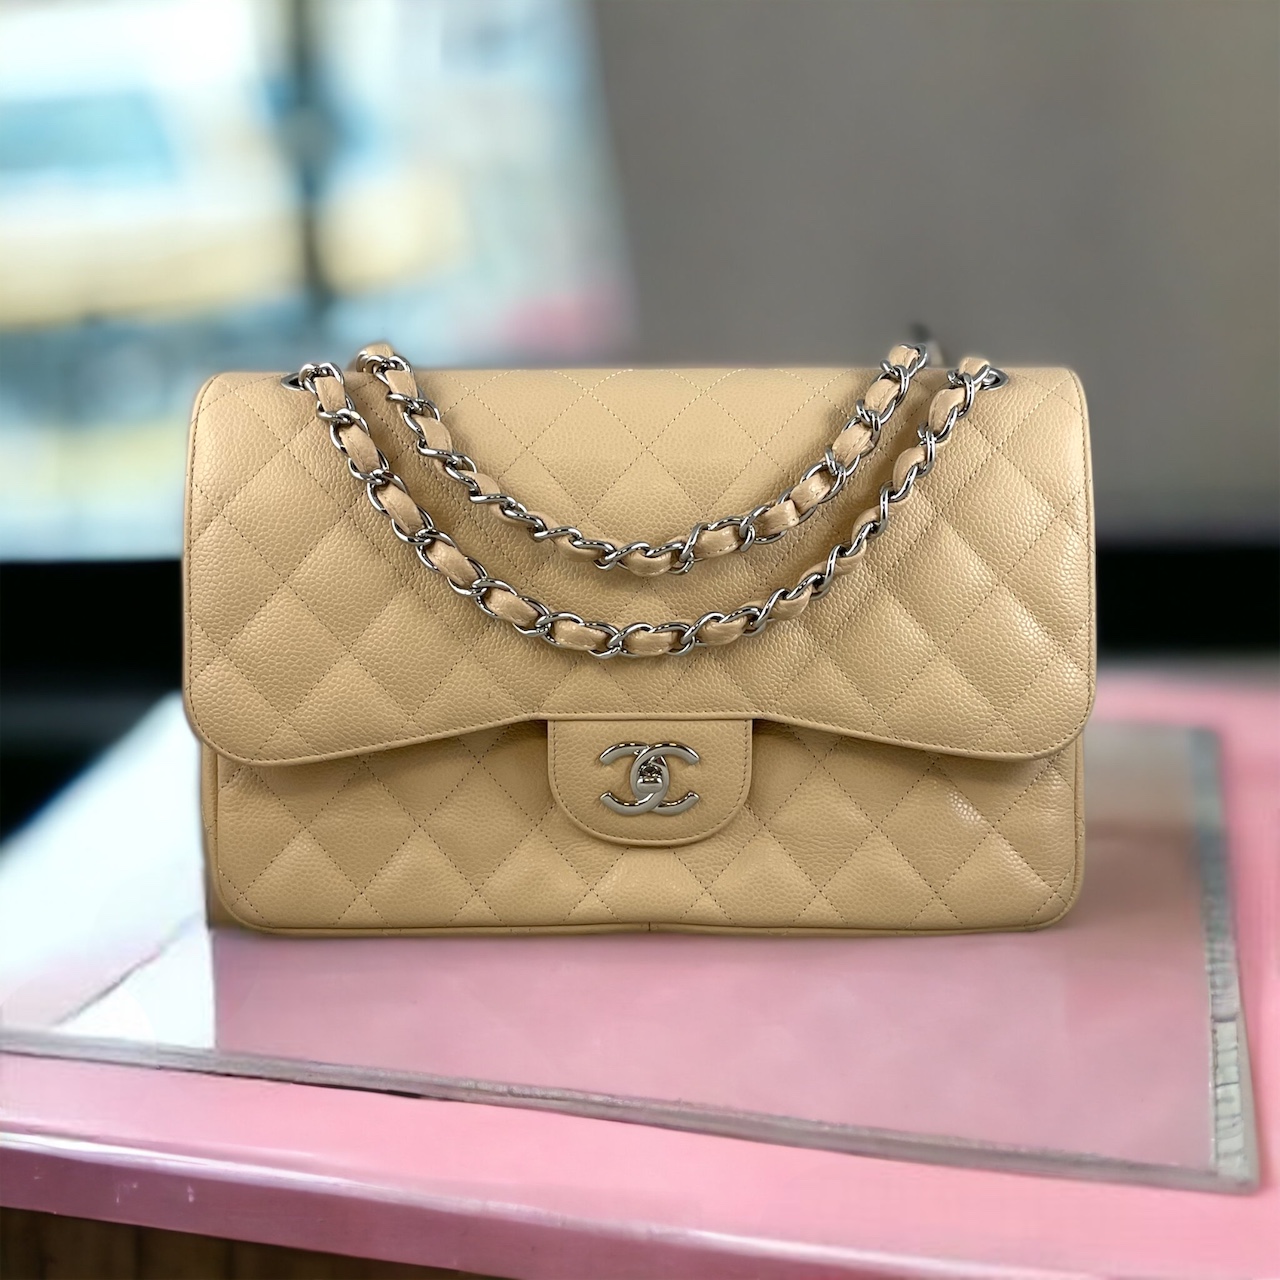 Chanel Caviar Double Flap Bag in Beige Clair | MTYCI